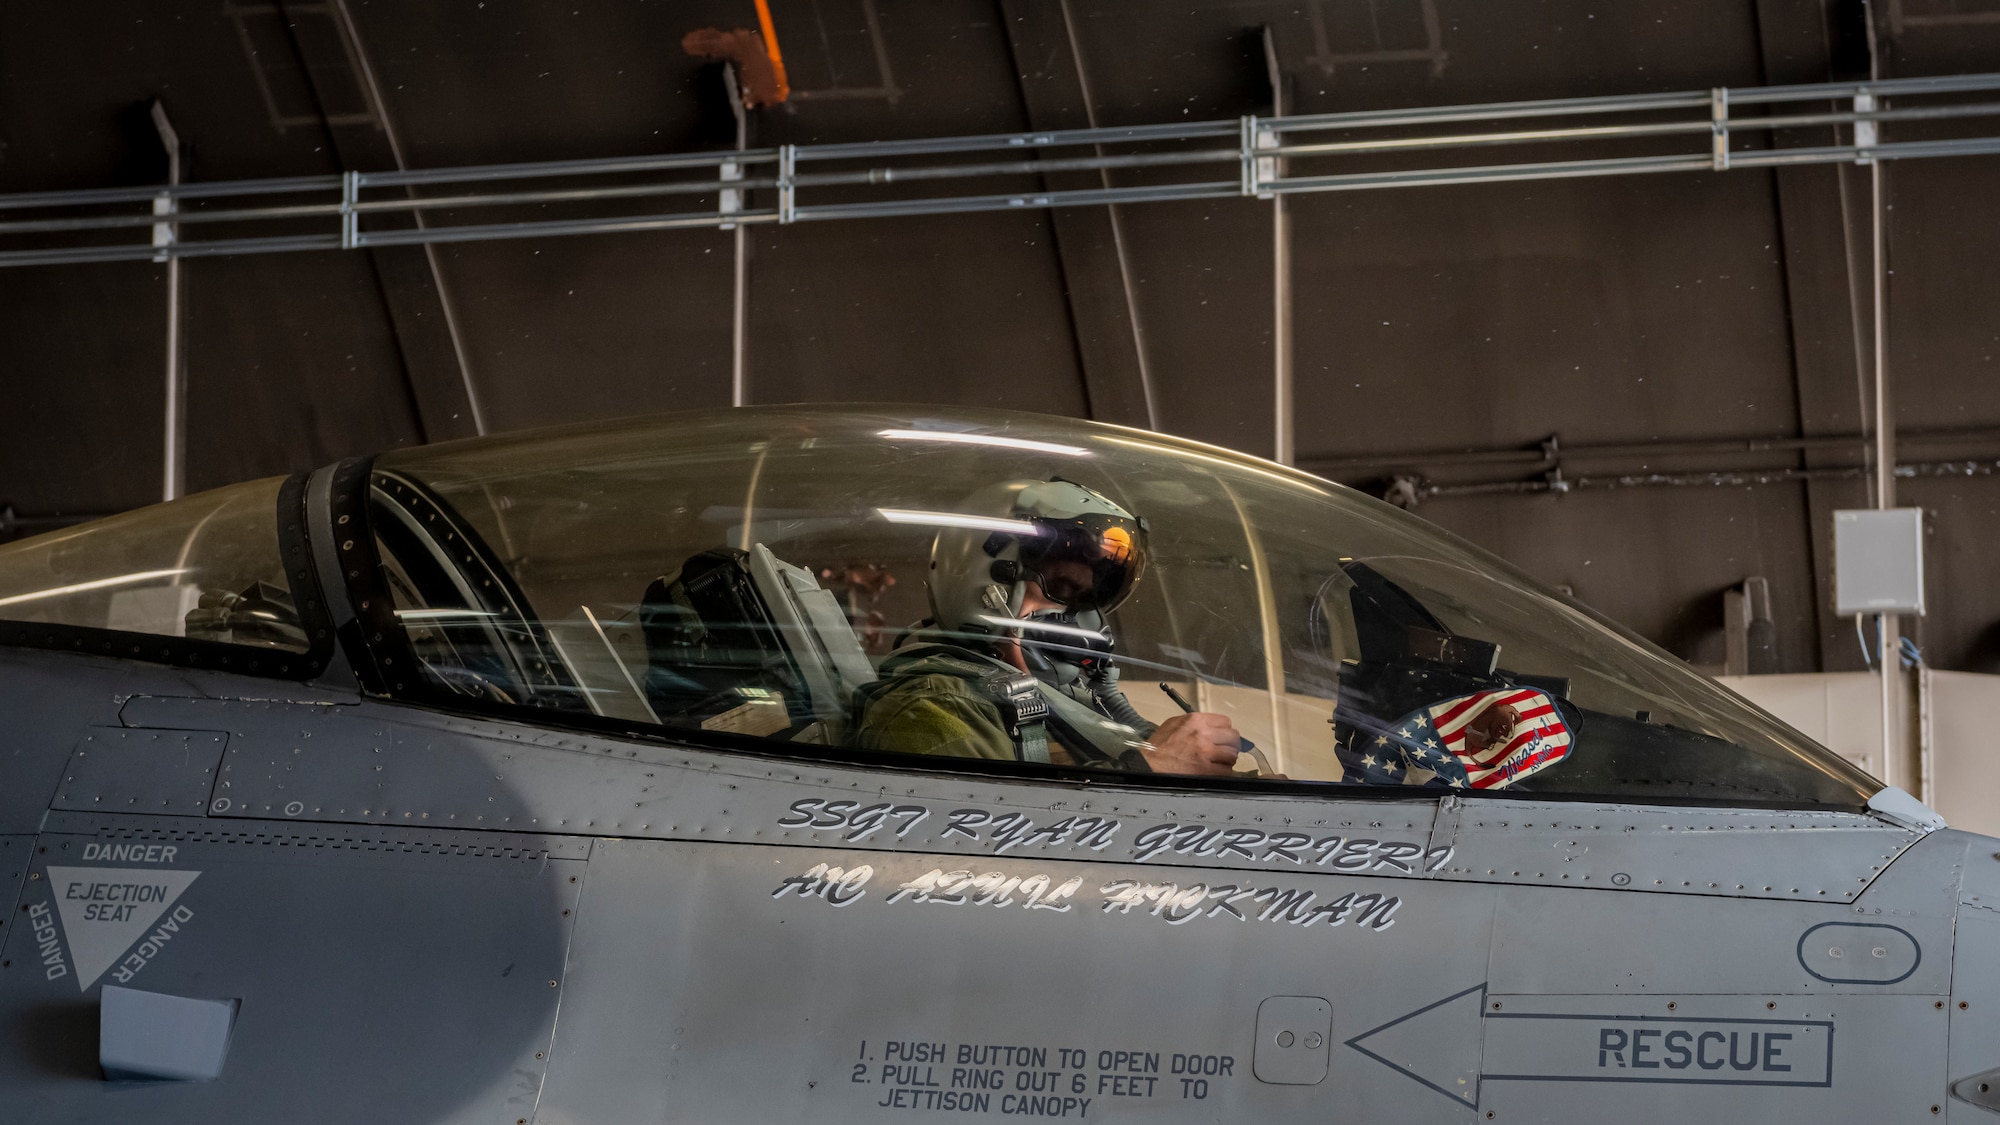 35th Fighter Wing commander preparing for pre-flight inspection.